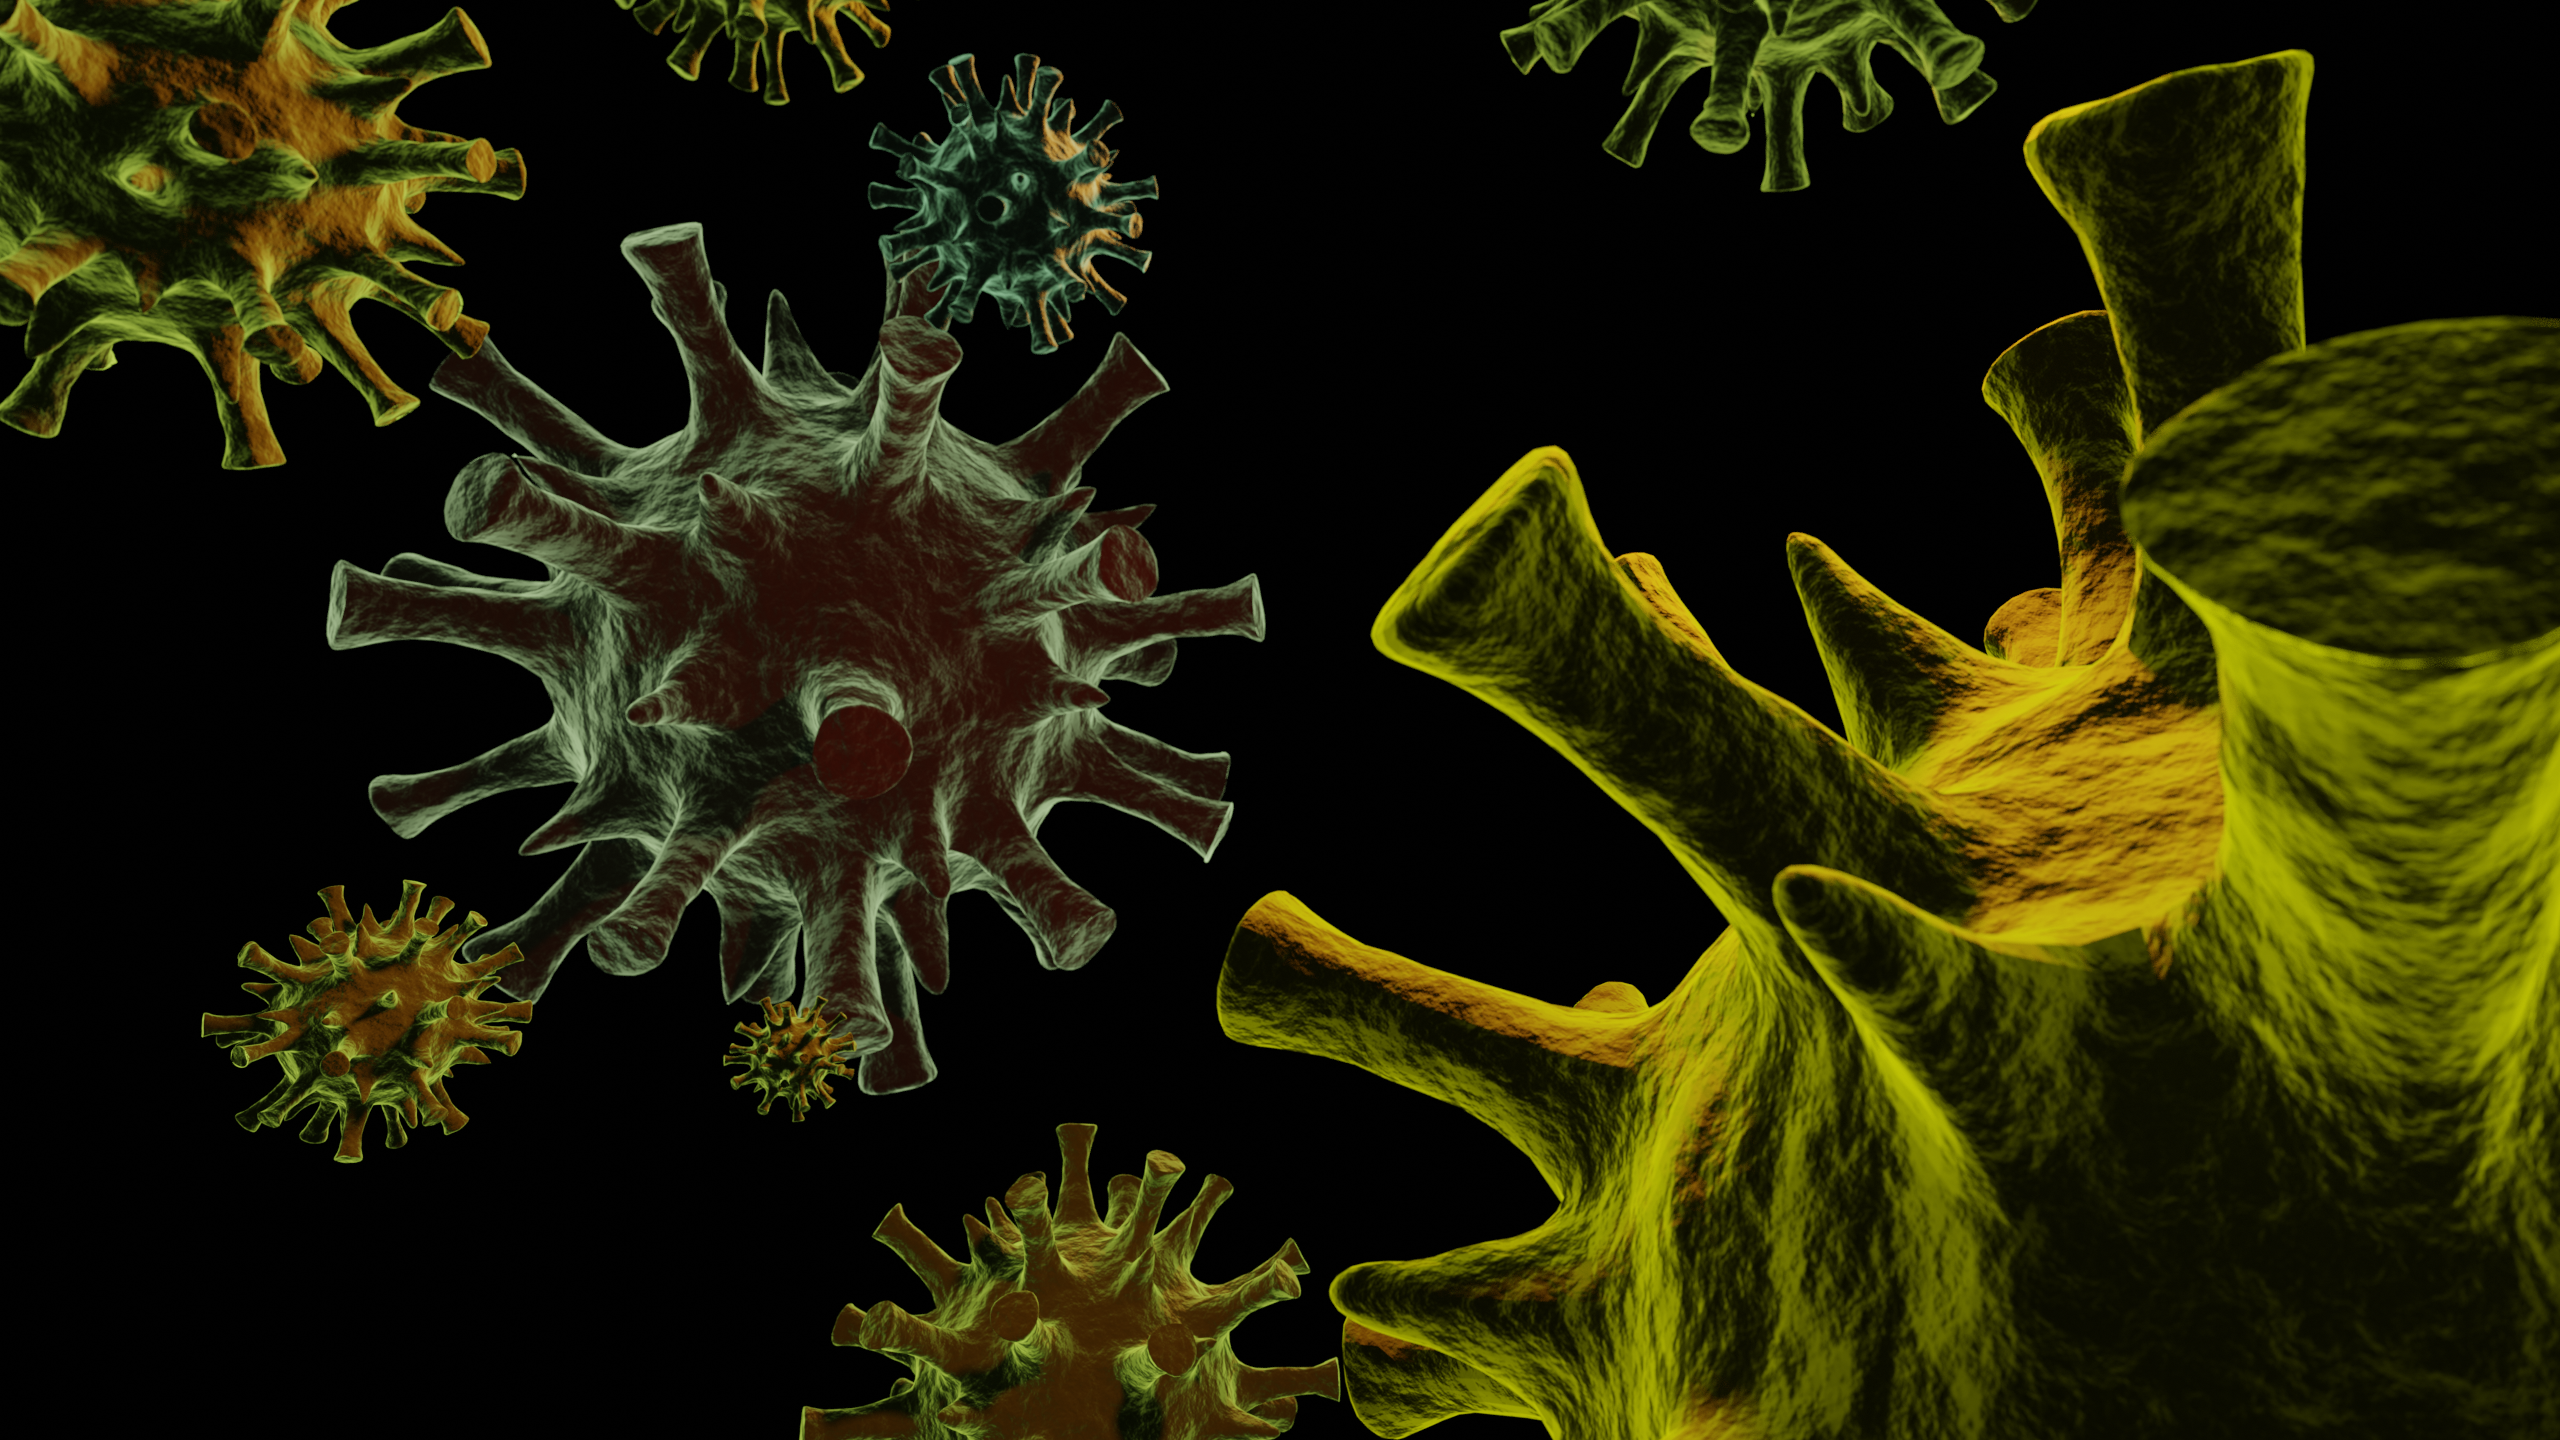 Disease Viruses Cells Magnification Digital Art 2560x1440